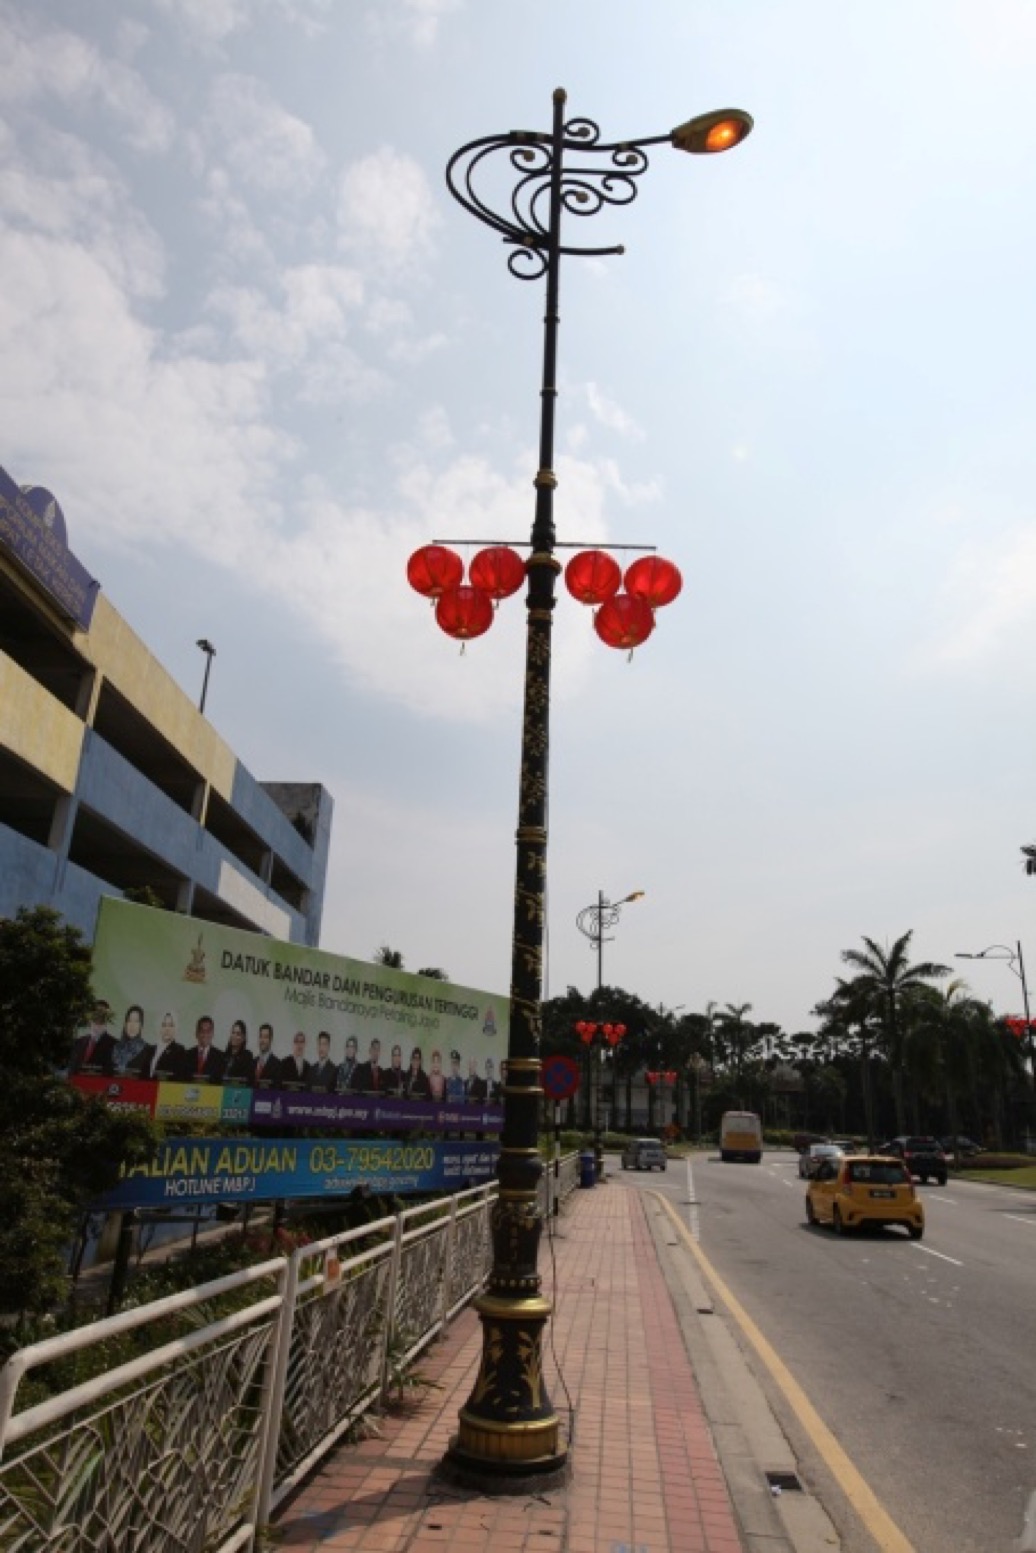 MALAYSIA STREET LAMP PROJECT